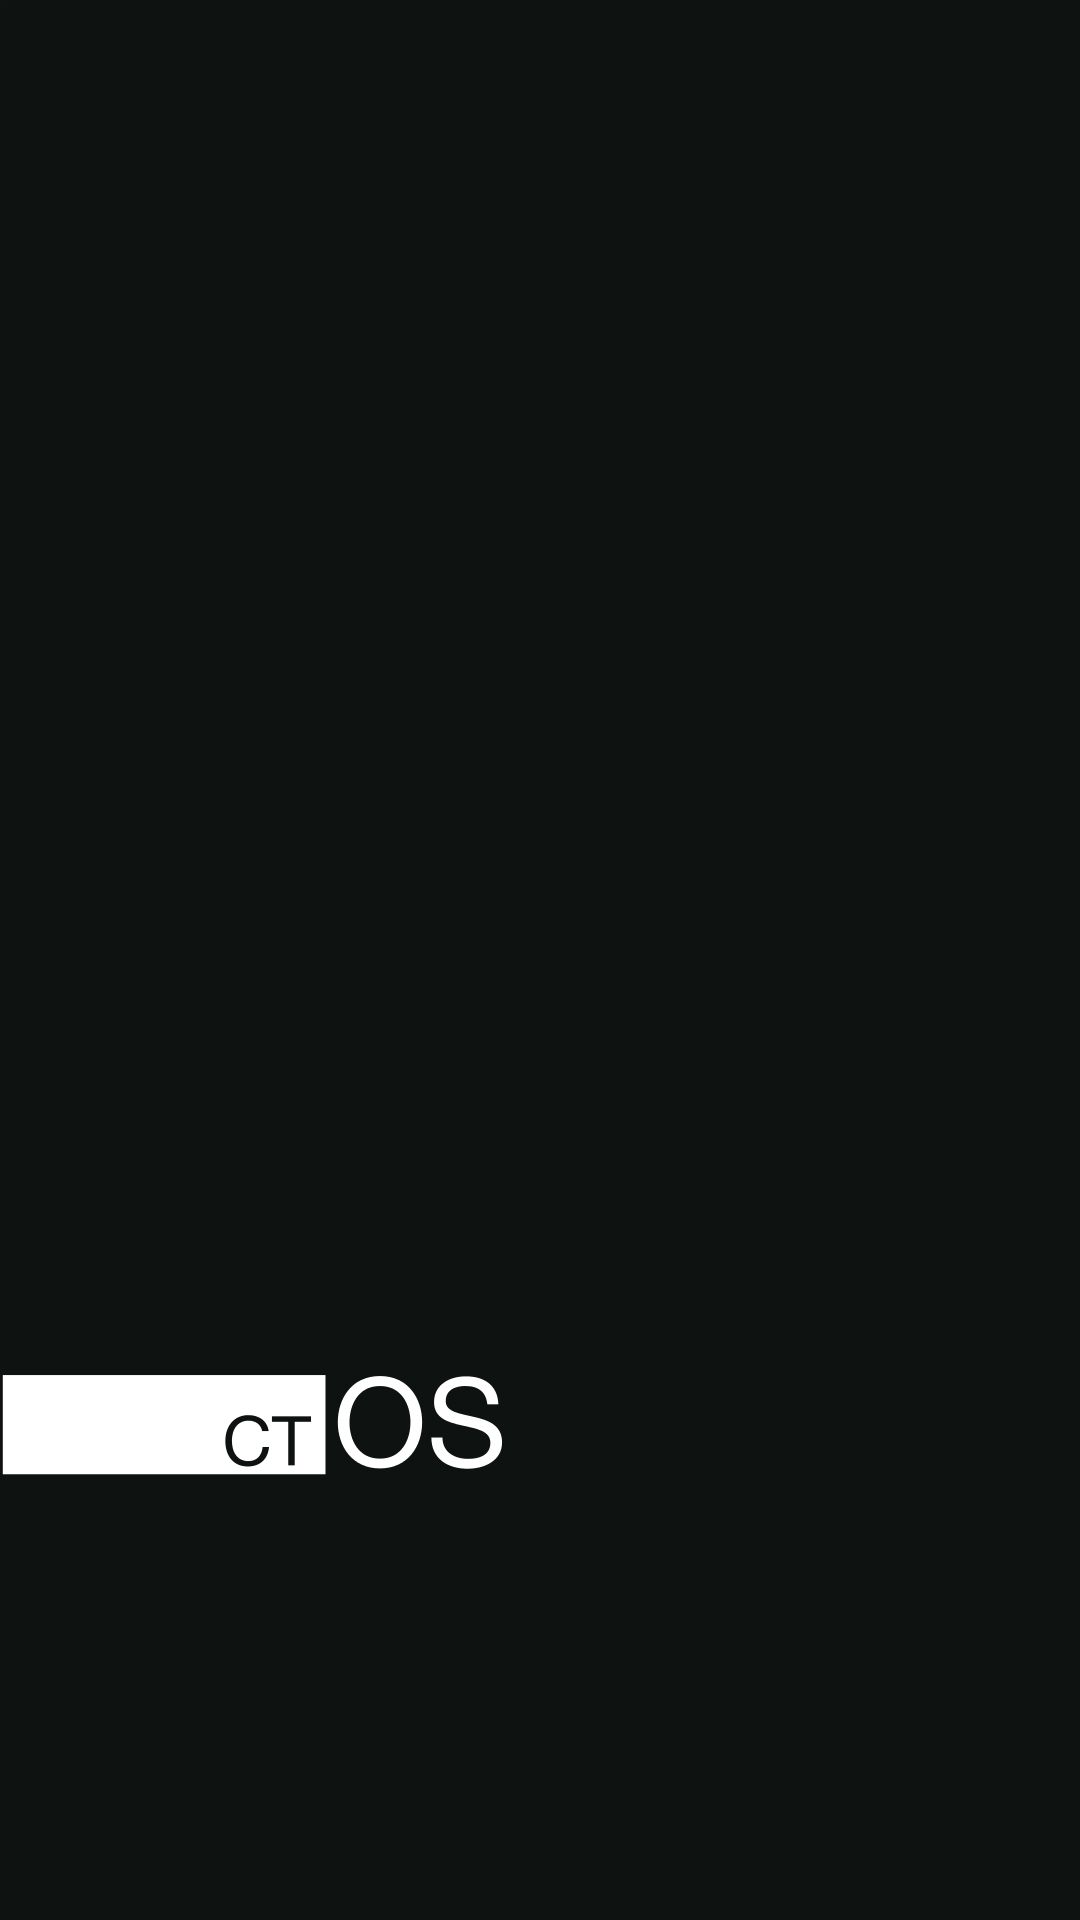 Ctos Logo Wallpaper Full HD Click Gaming